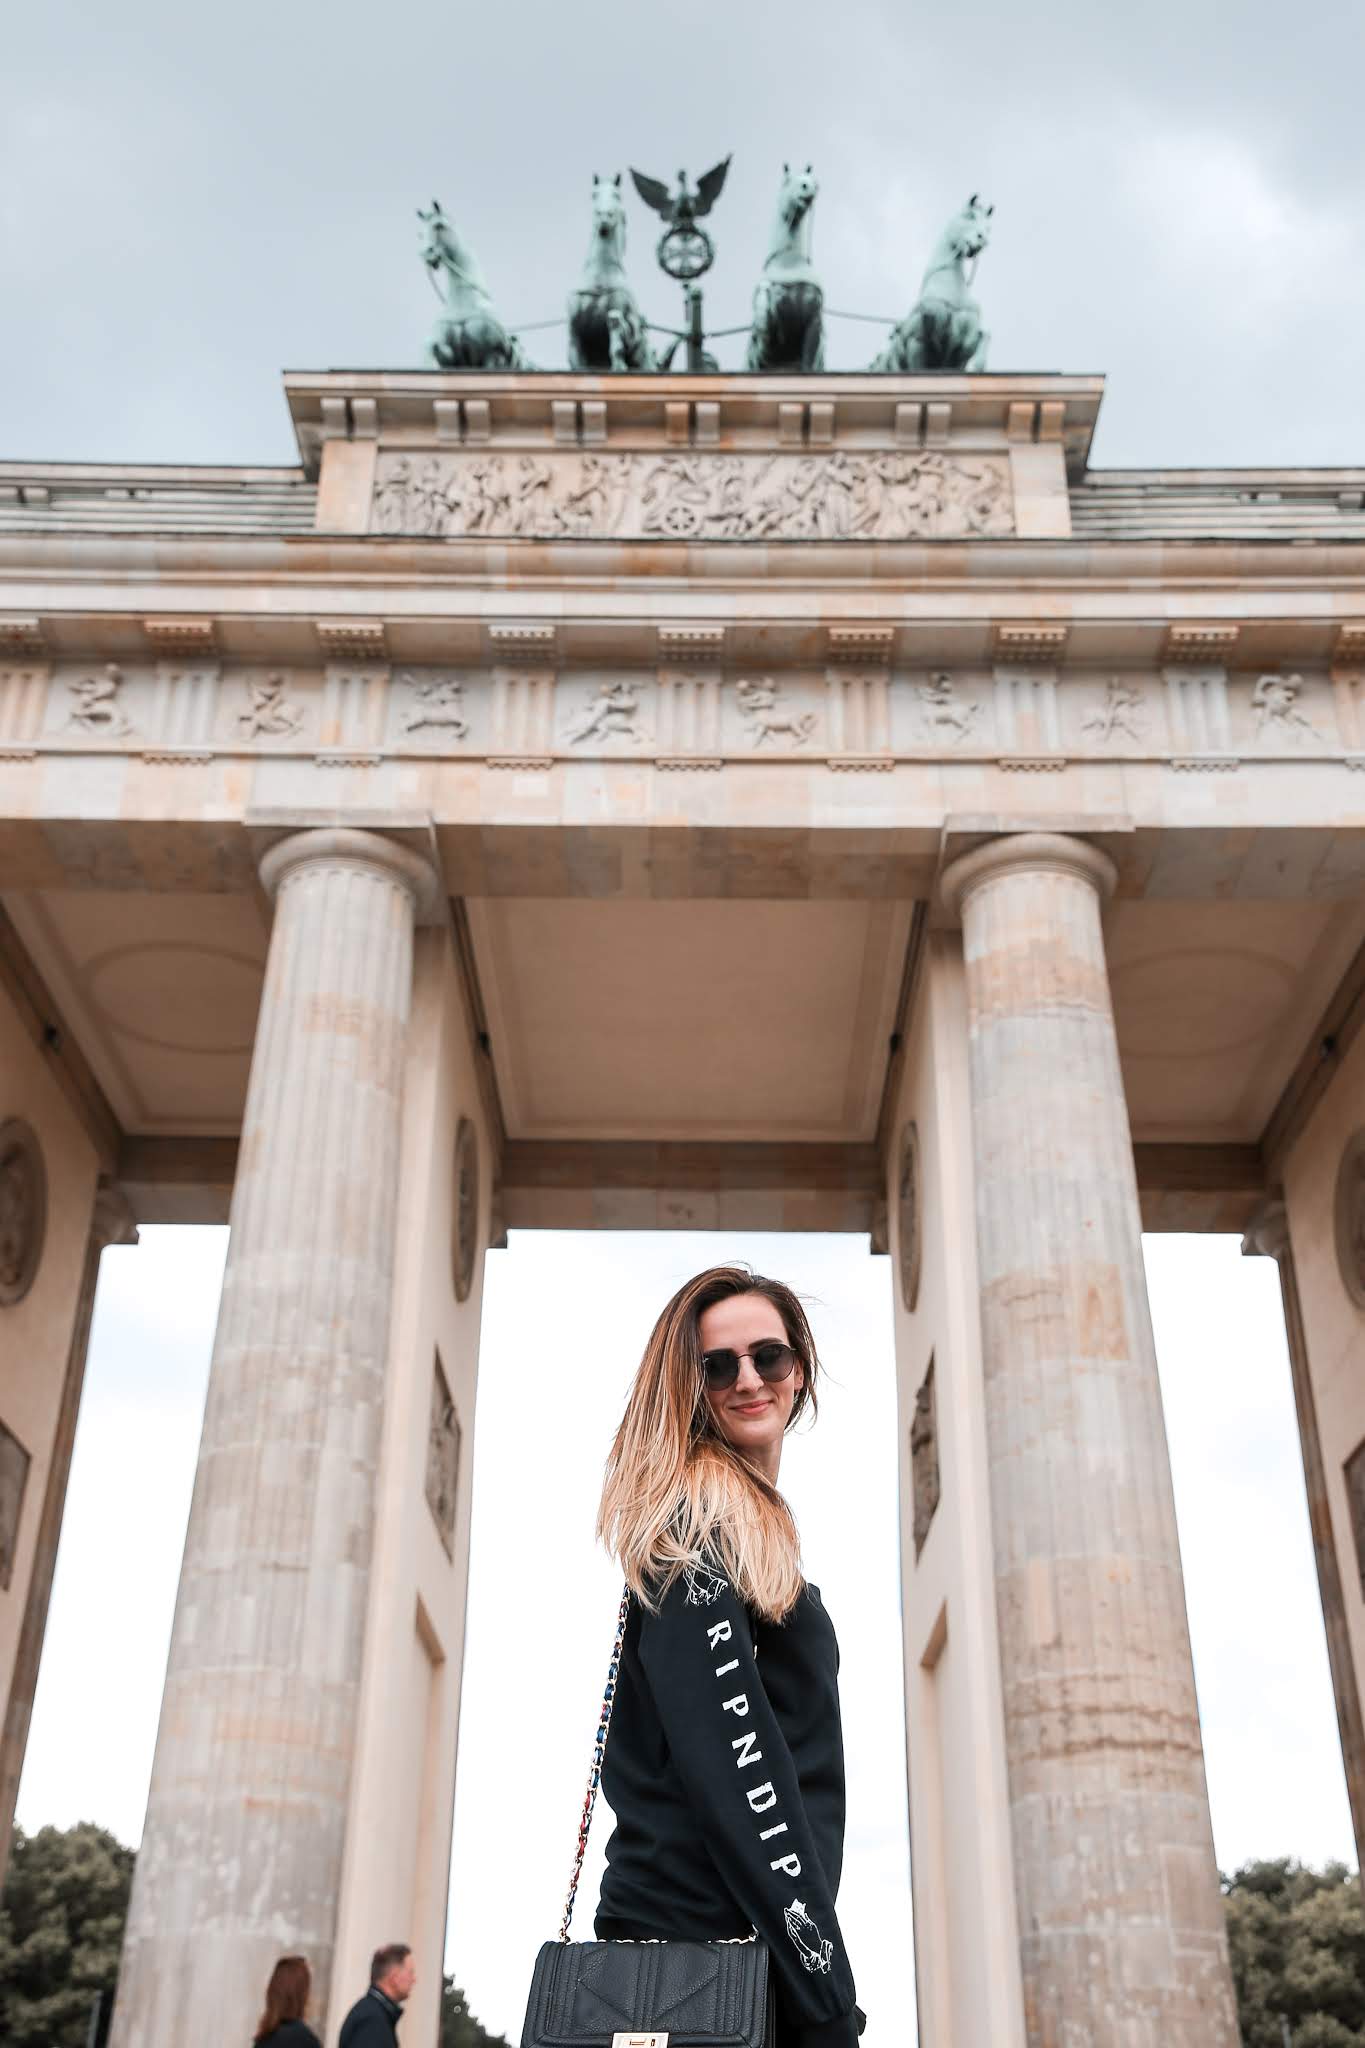 Alicia Mara at The Brandenburg Gate